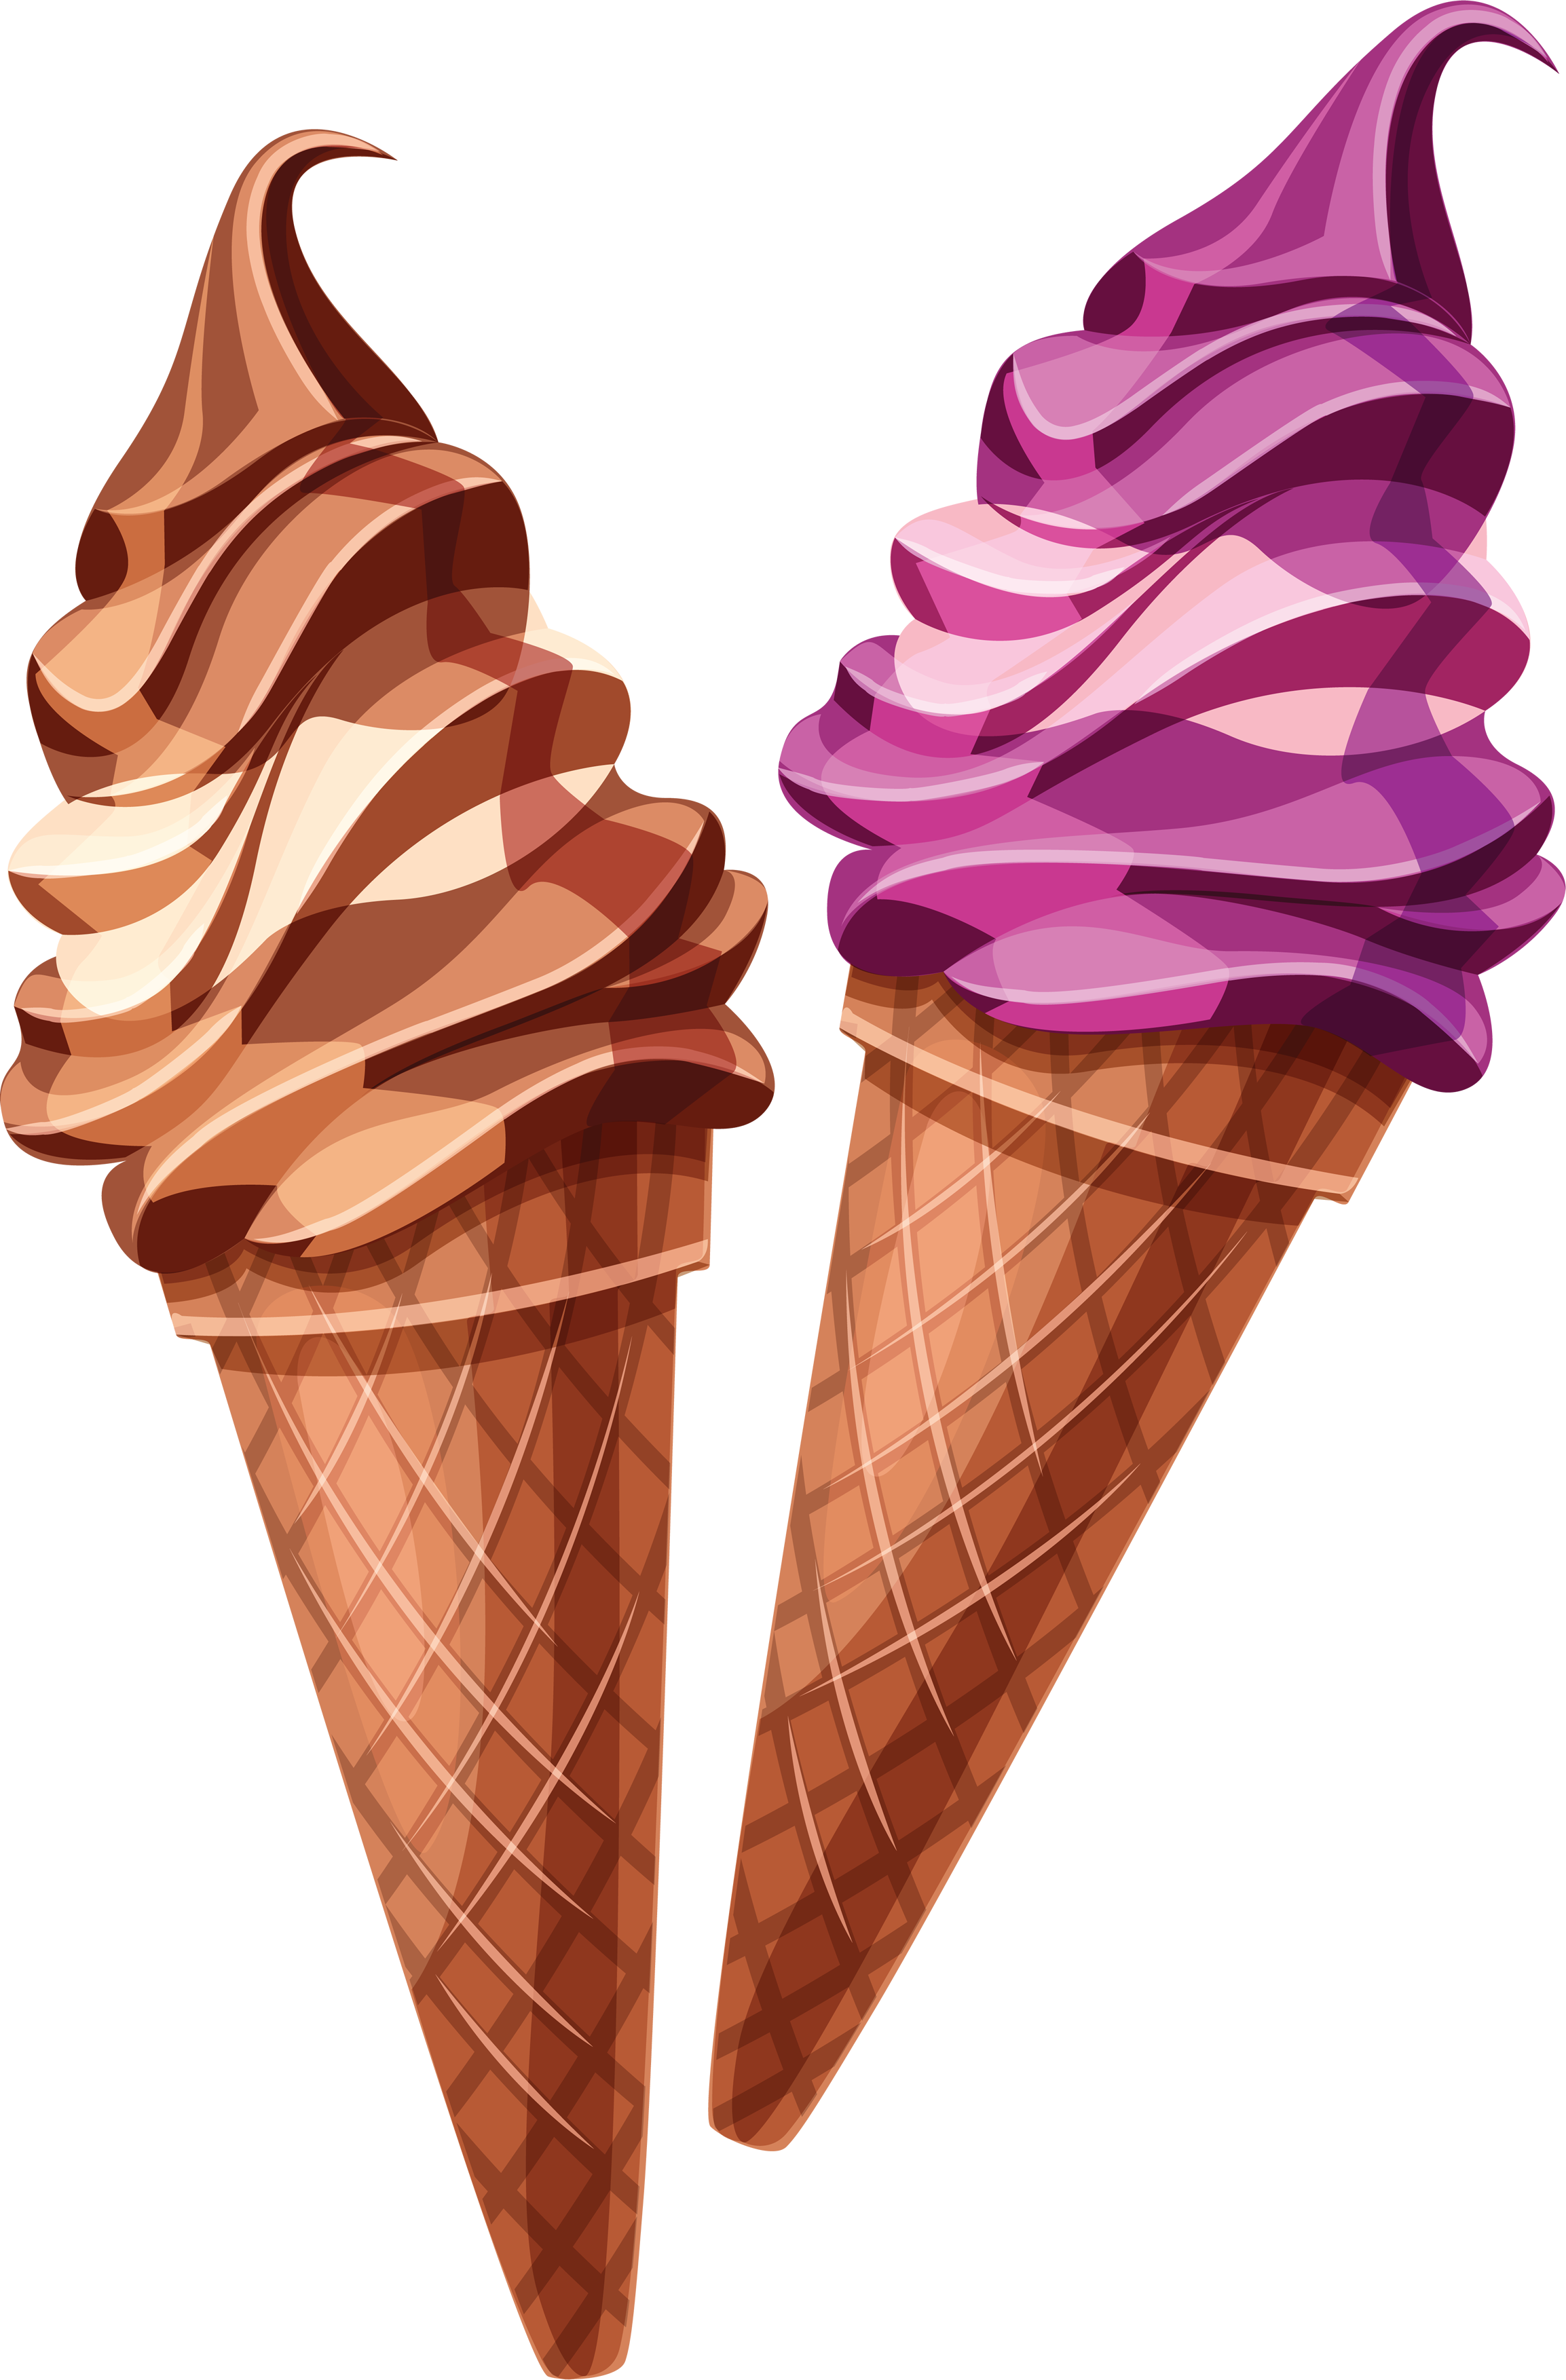 Purple and Brown Ice Cream Cones